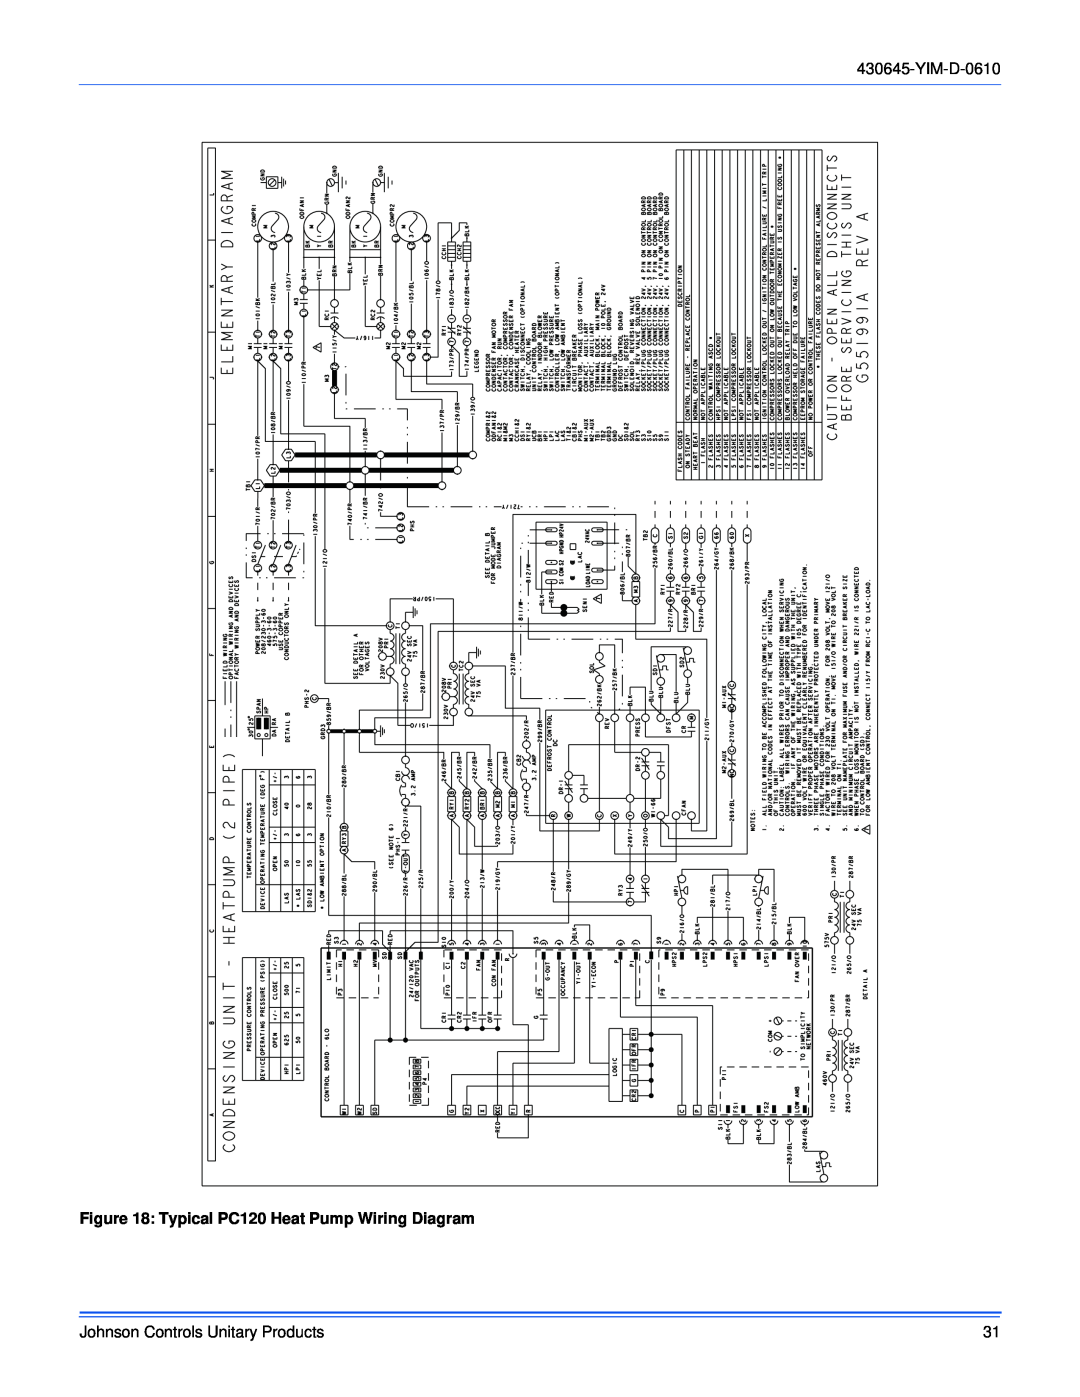 Johnson Controls PC090 THRU 240, PD 180 THRU 240 Typical PC120 Heat Pump Wiring Diagram, Johnson Controls Unitary Products 